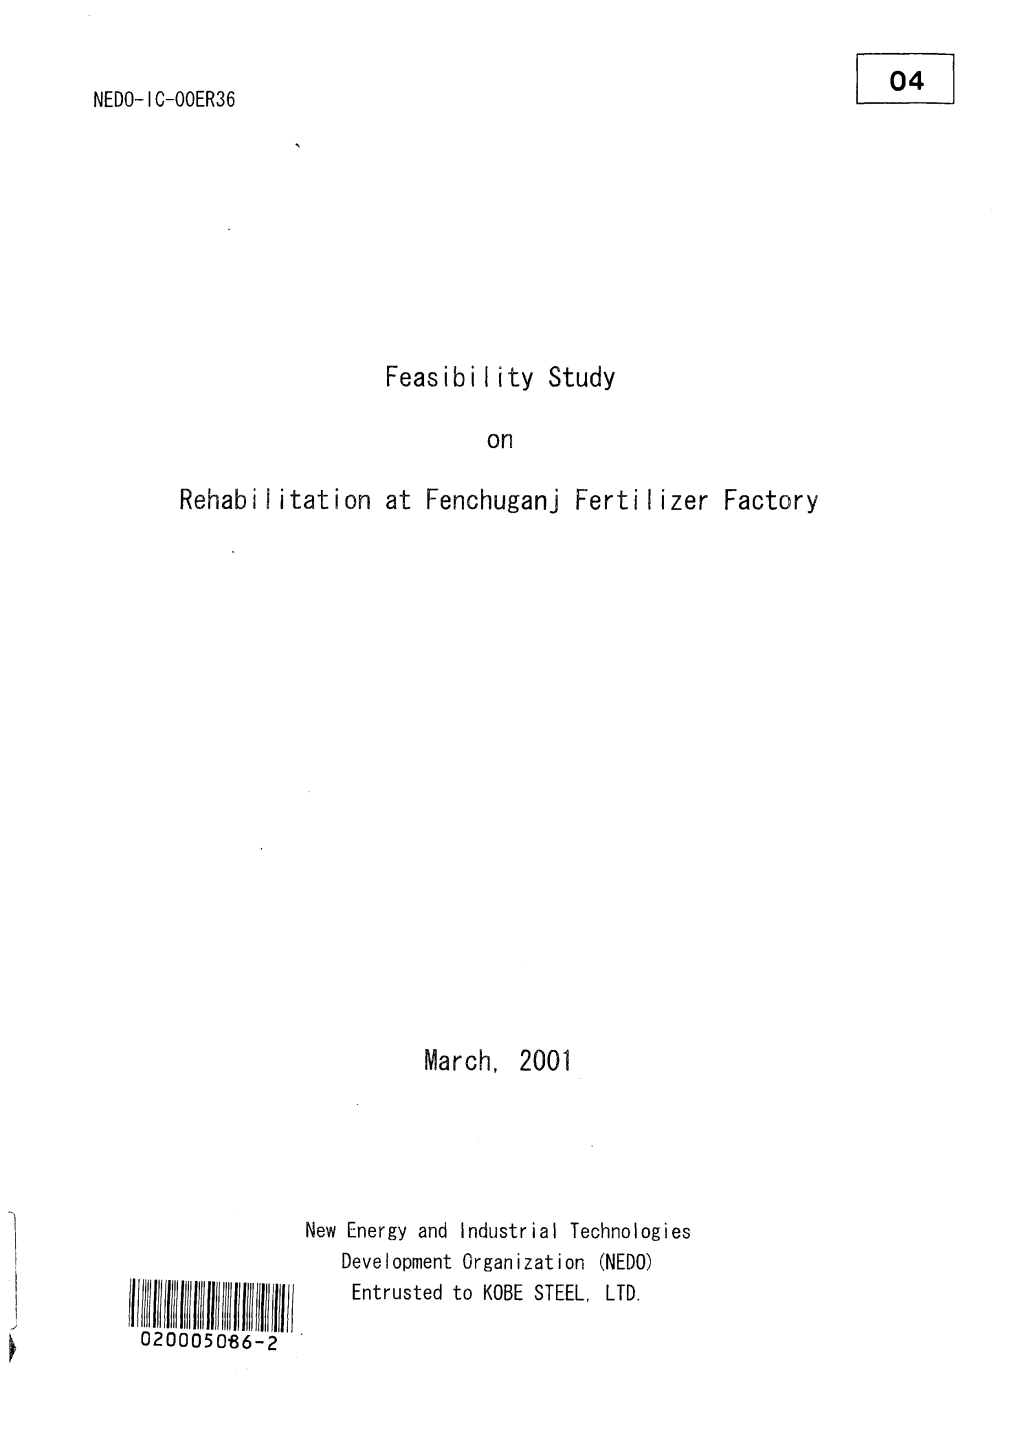 FEASIBILITY STUDY on REHABILITATION at FENCHUGANJ FERTILIZER FACTORY Kobe Steel, Ltd., Japan March, 2001